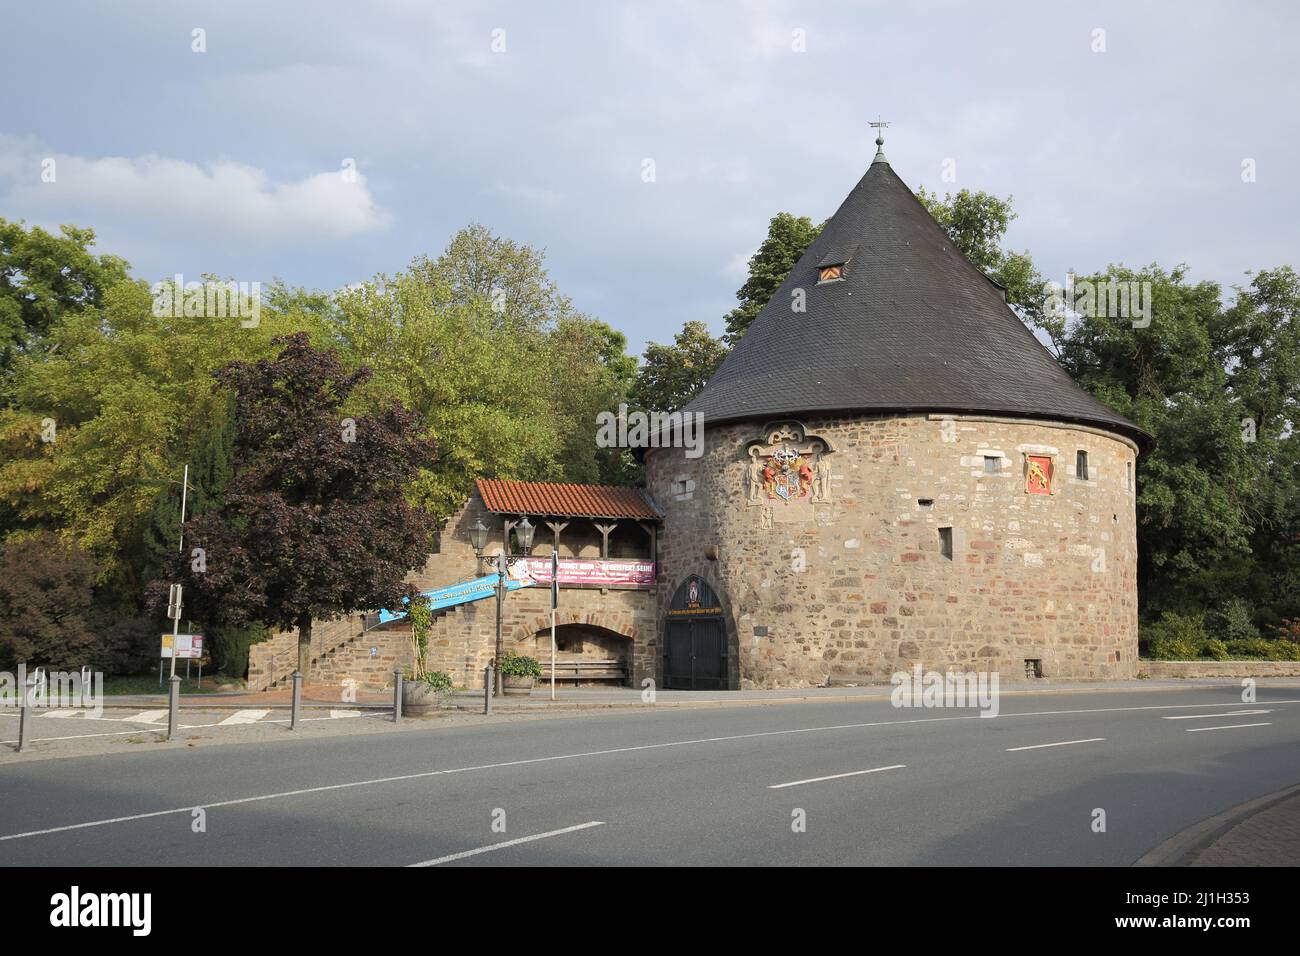 Historical city wall rotunda in Hann. Munden, Lower Saxony, Germany Stock Photo